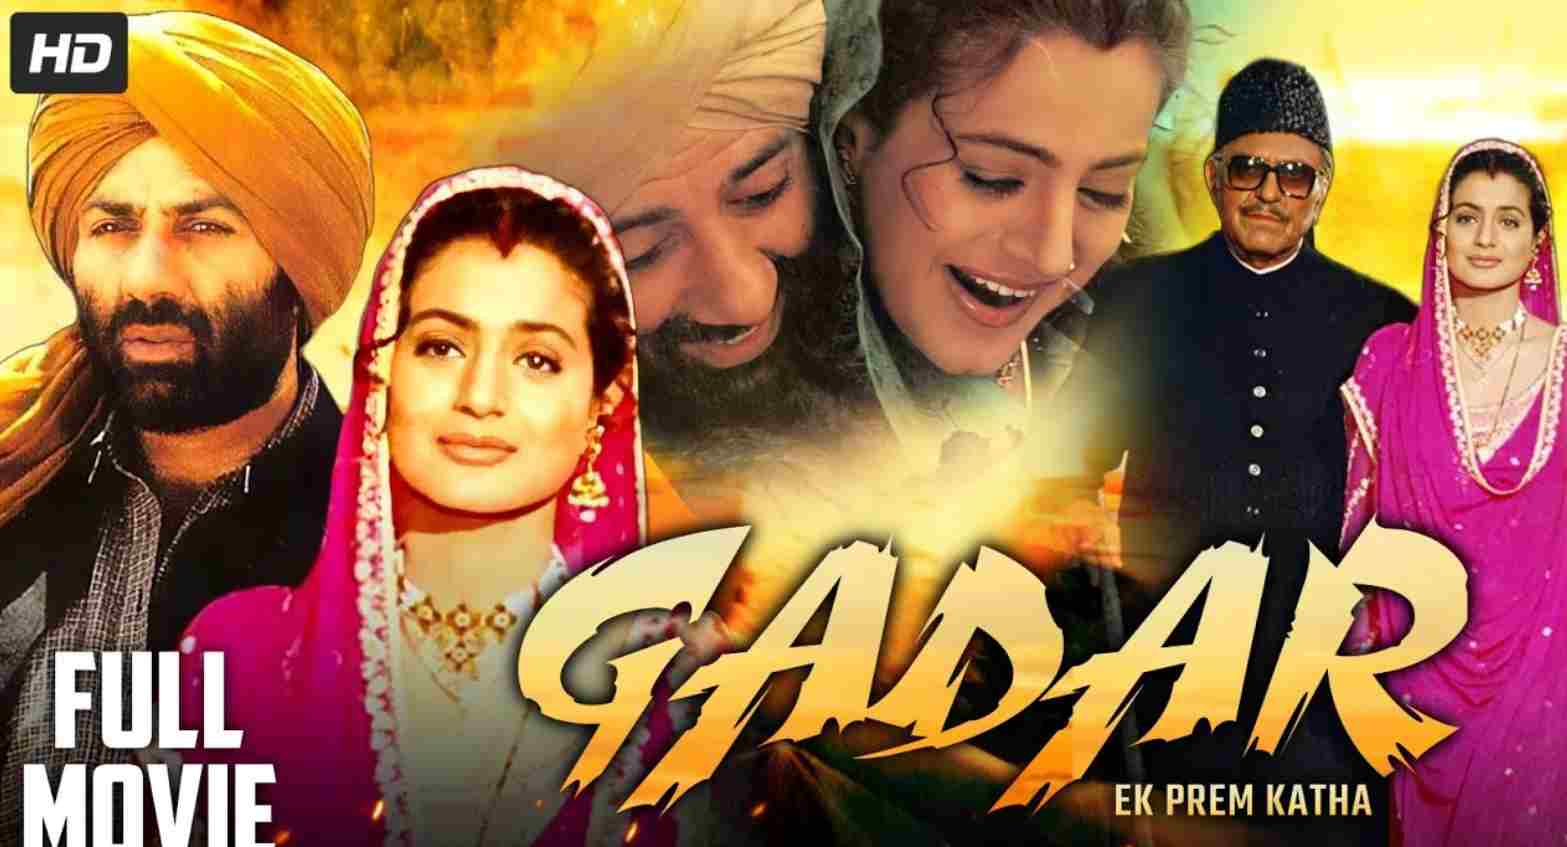 Gadar movie review- The Bridge